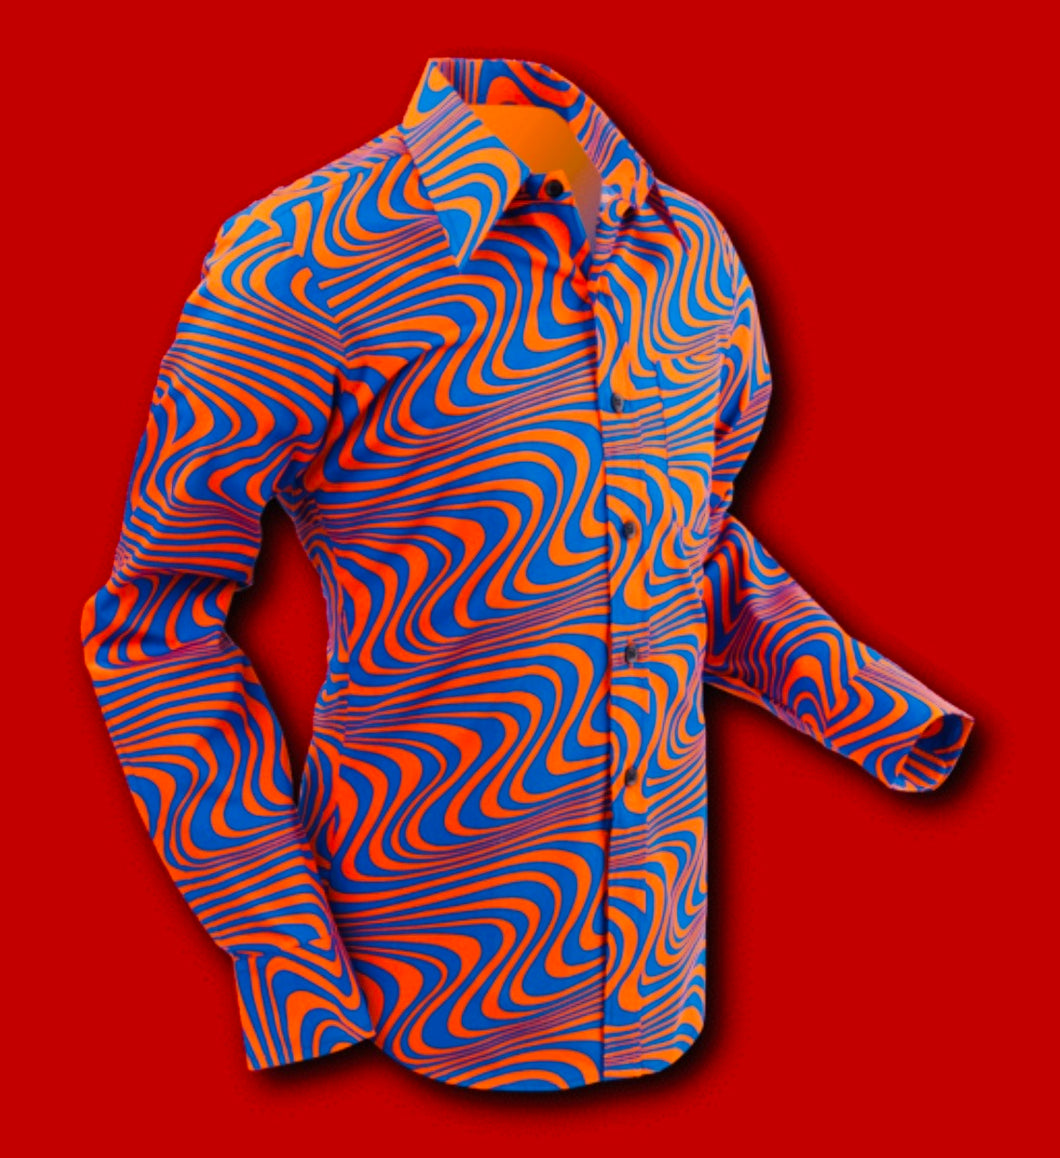 Wavyline design long sleeved Retro 70s style shirt in Orange & Blue